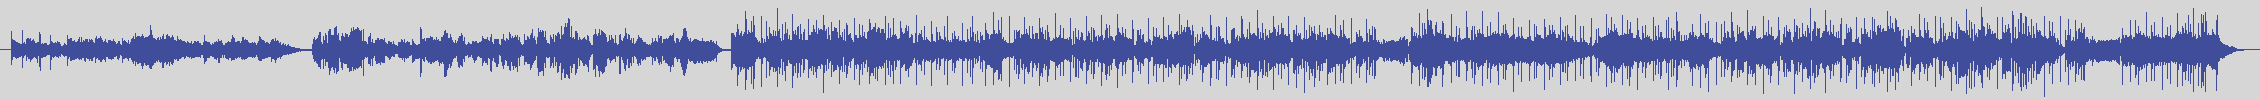 digiphonic_records [DPR003] Nino D'Angelo - Illusione [Original Mix] audio wave form